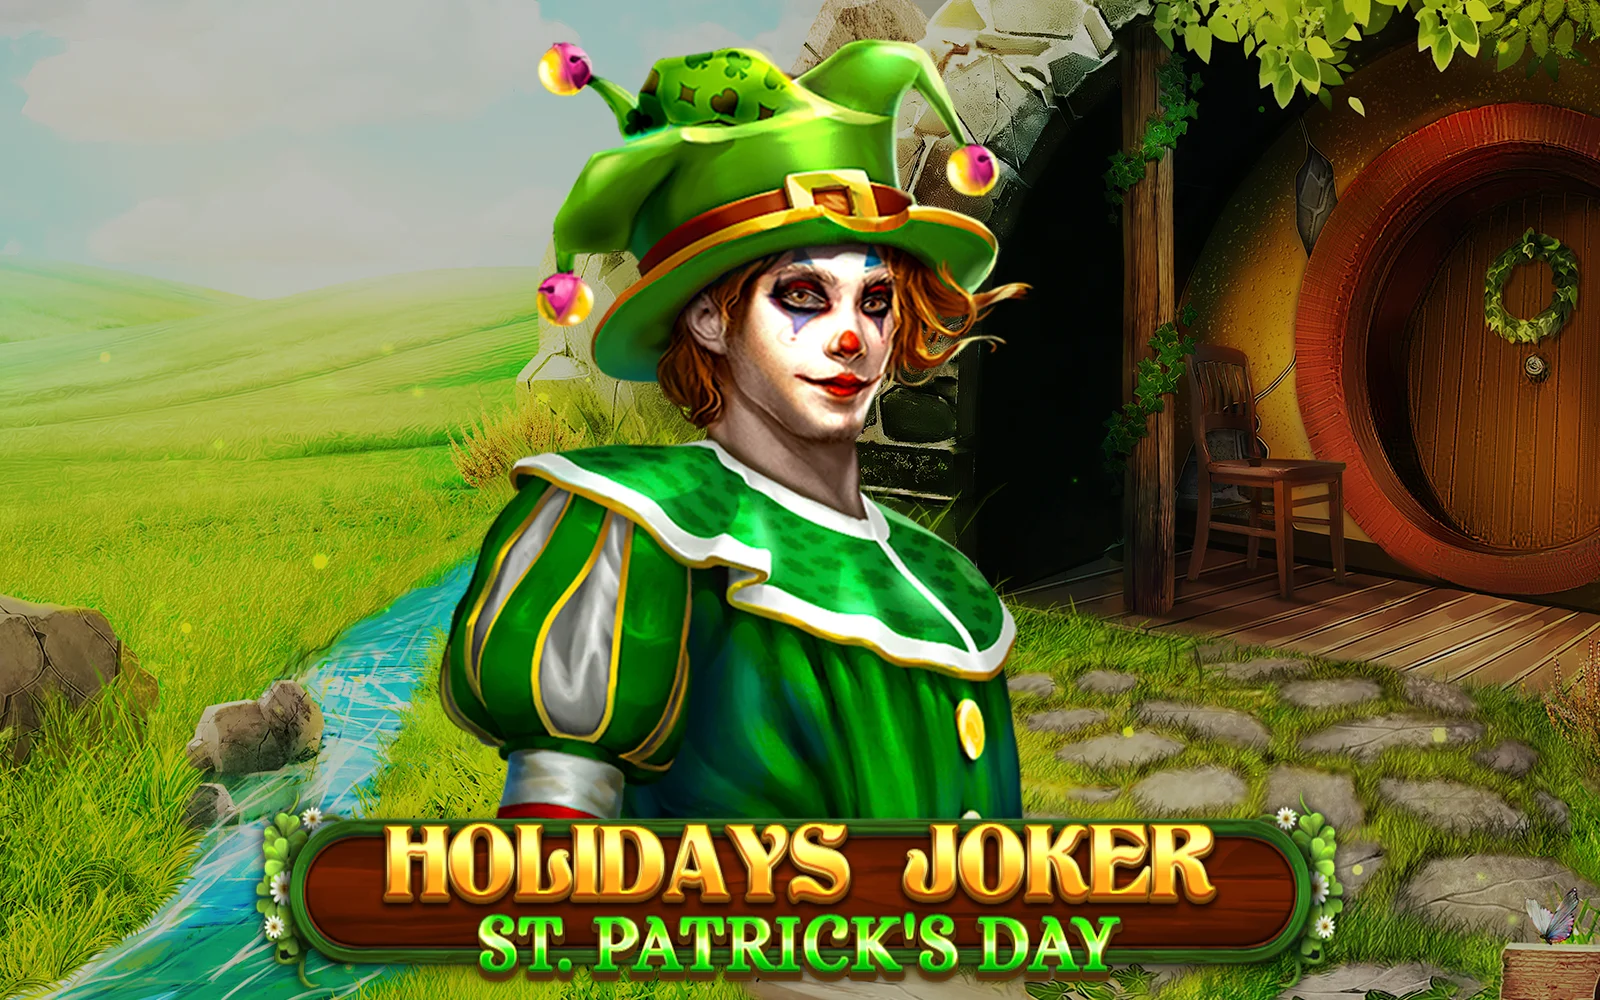 Play Holiday Joker - St. Patrick's Day on Starcasino.be online casino